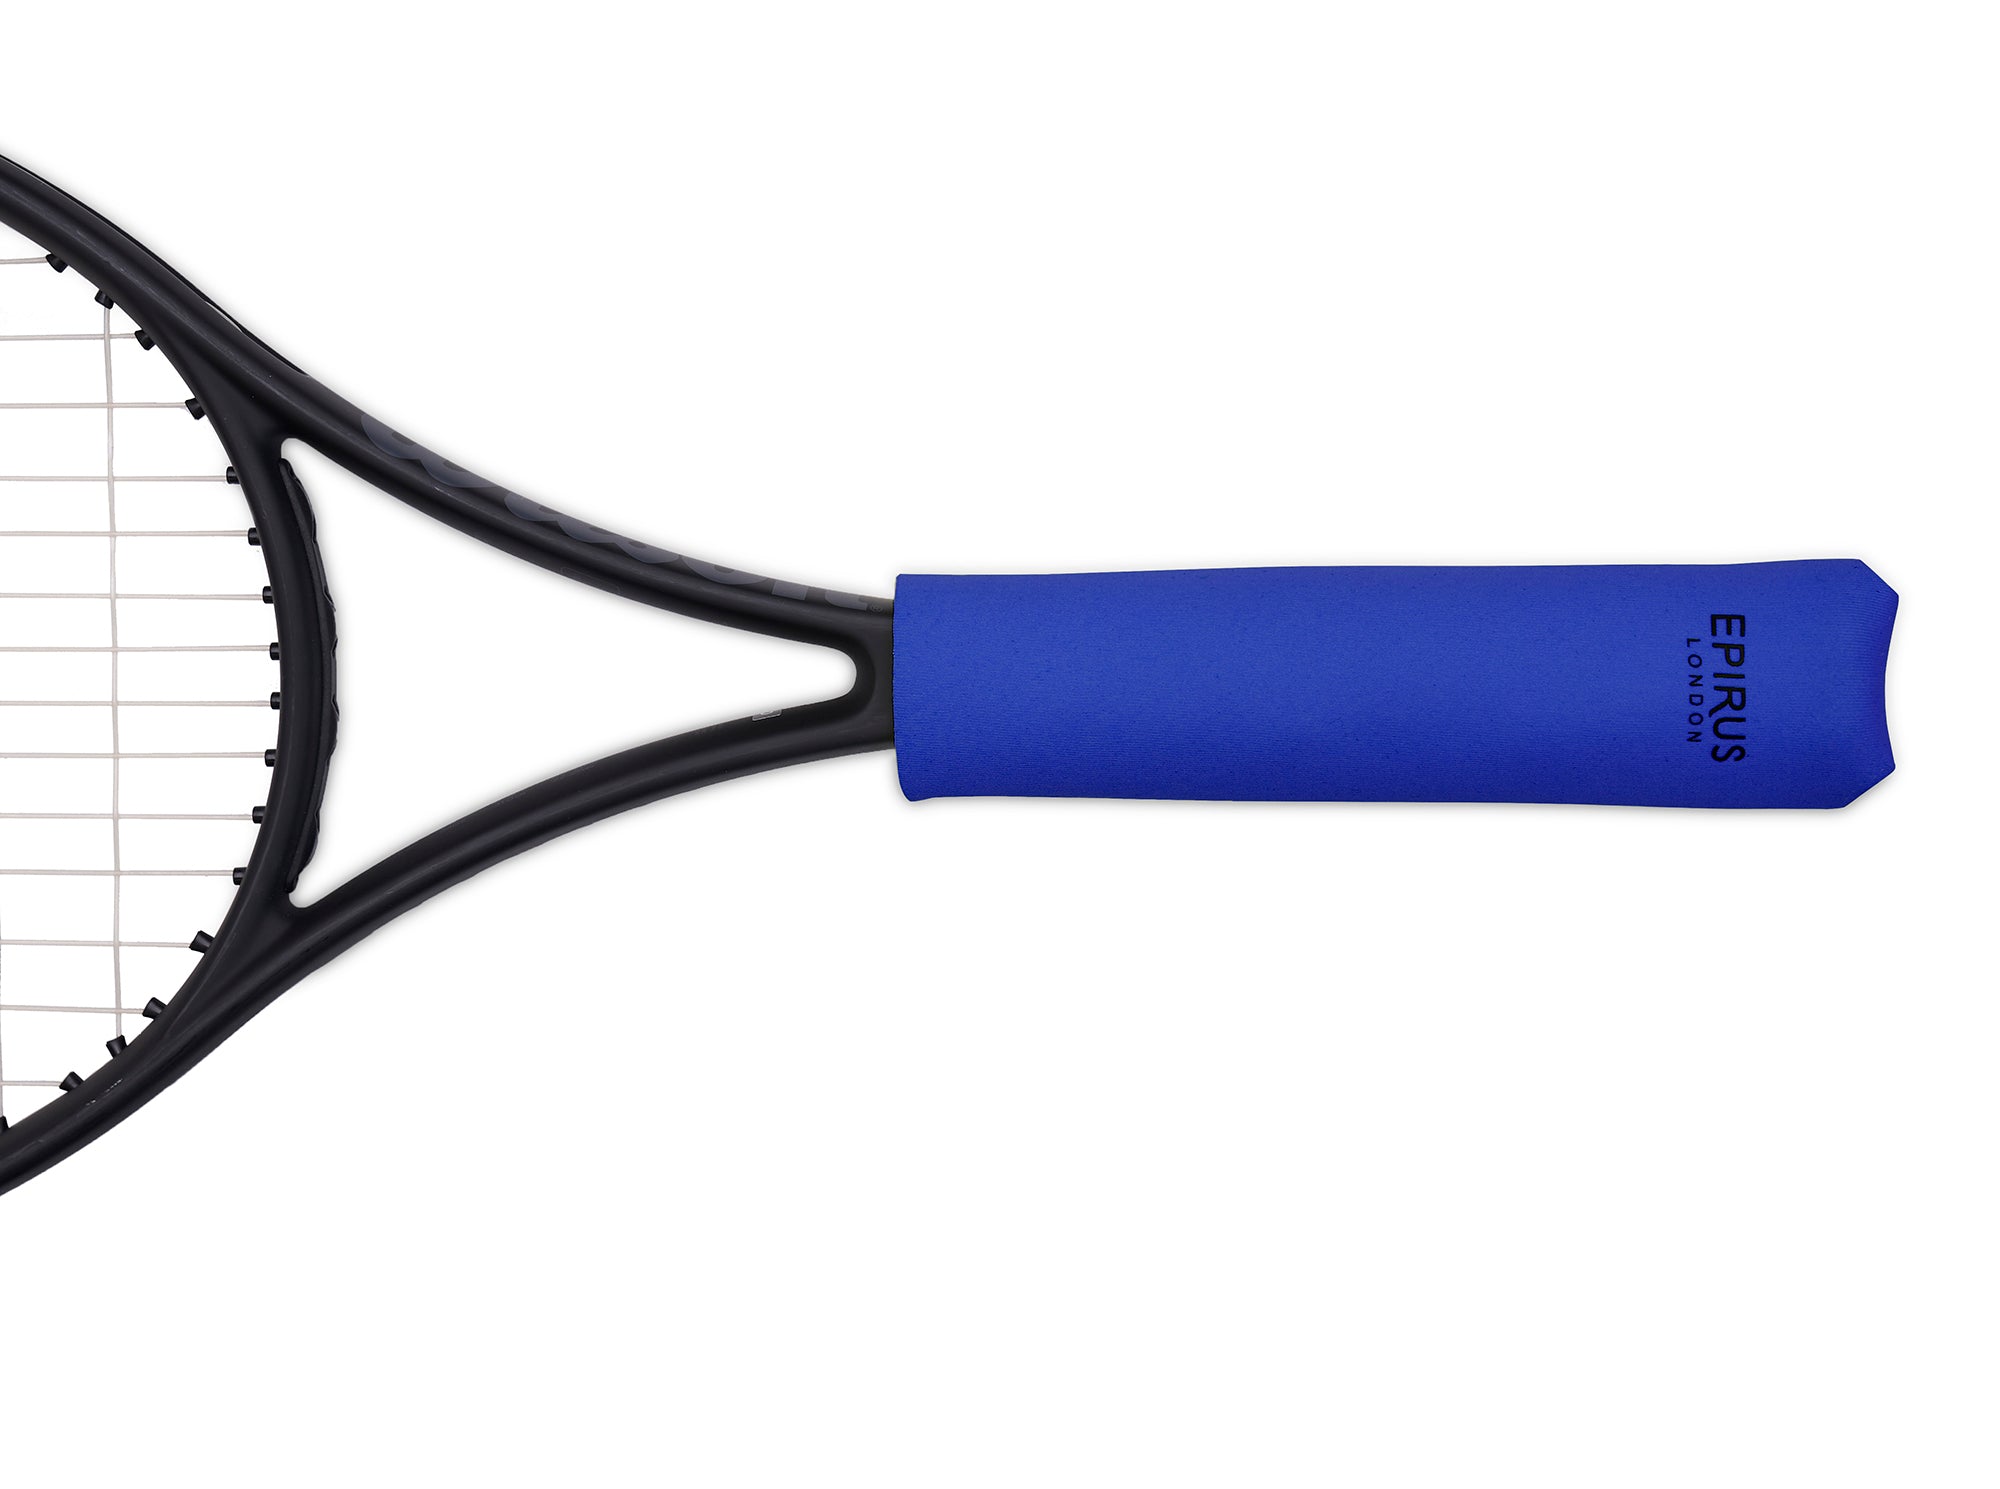 Epirus Neoprene Grip Cover (Blue) keeps your tennis grips dry